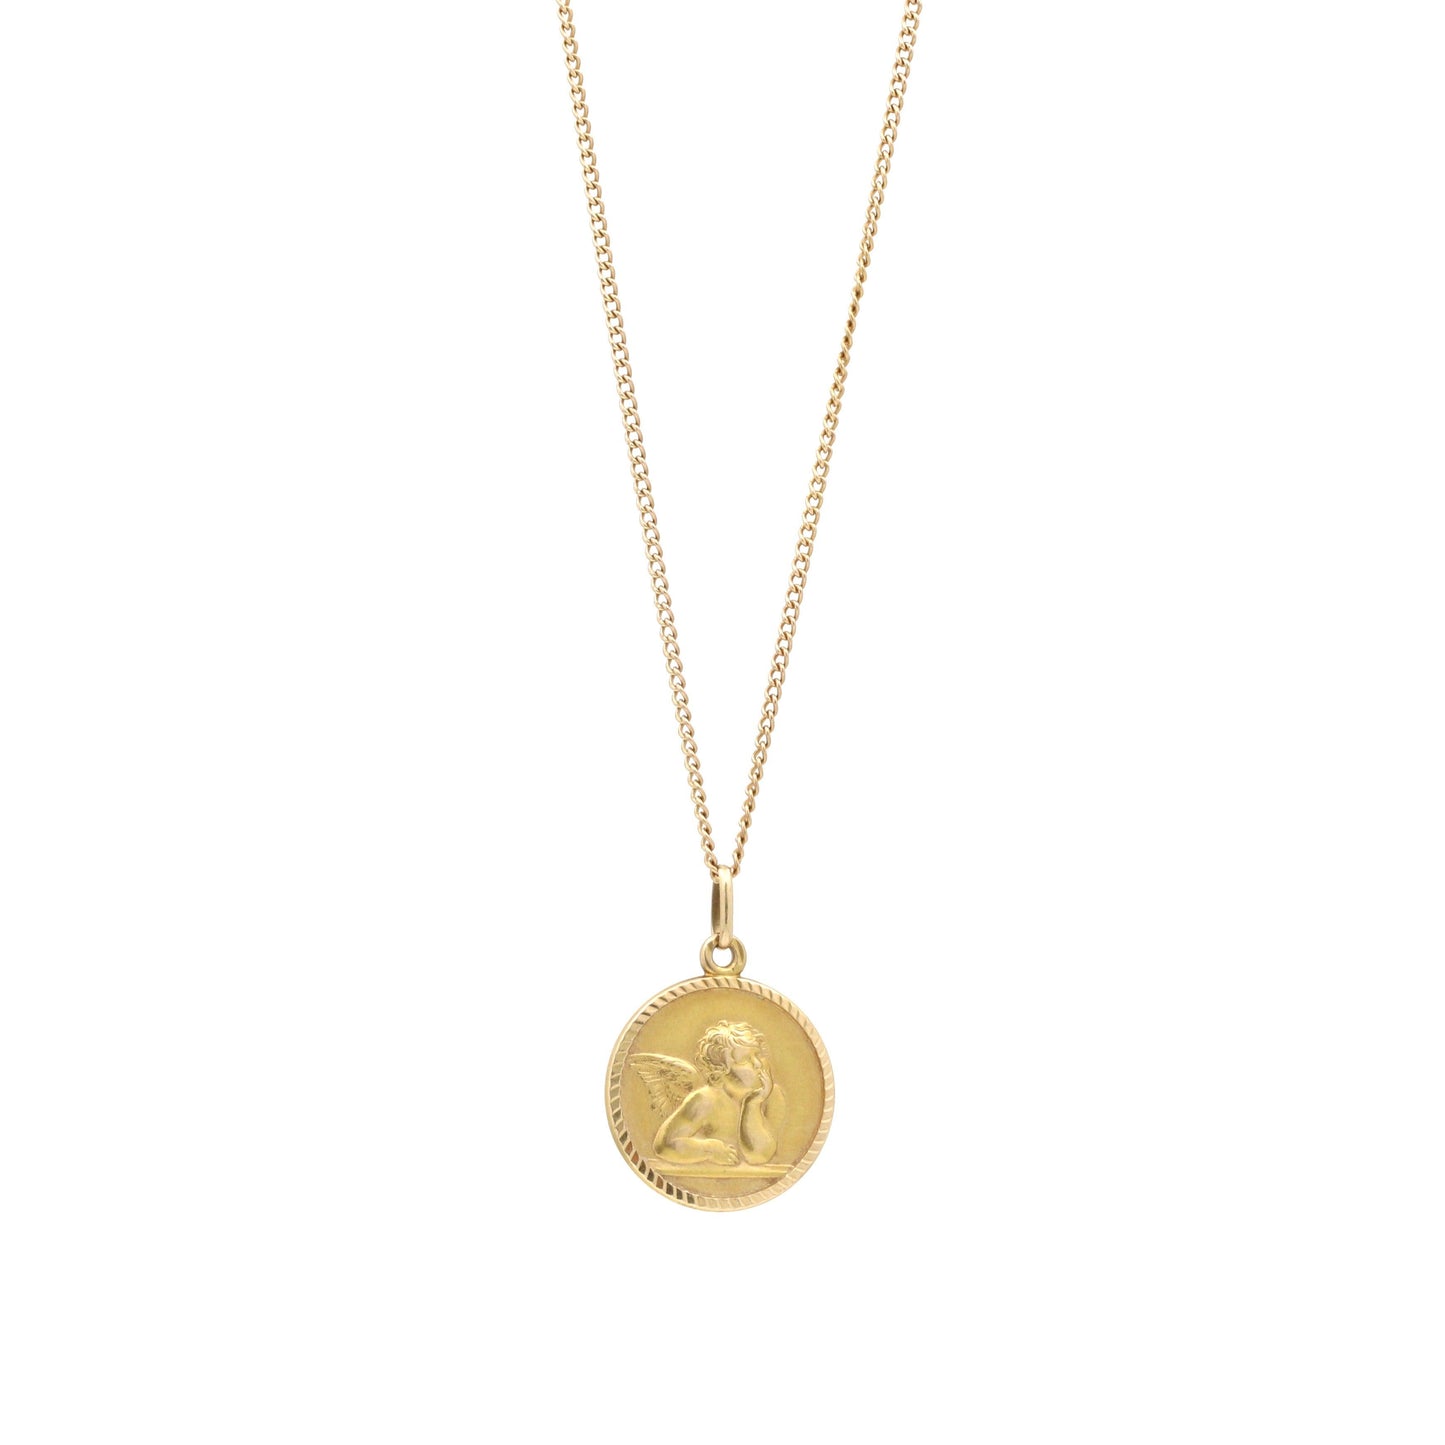 Cherub Angel Medallion Pendant Long Necklace in 14k Yellow Gold 24" - 31 Jewels Inc.